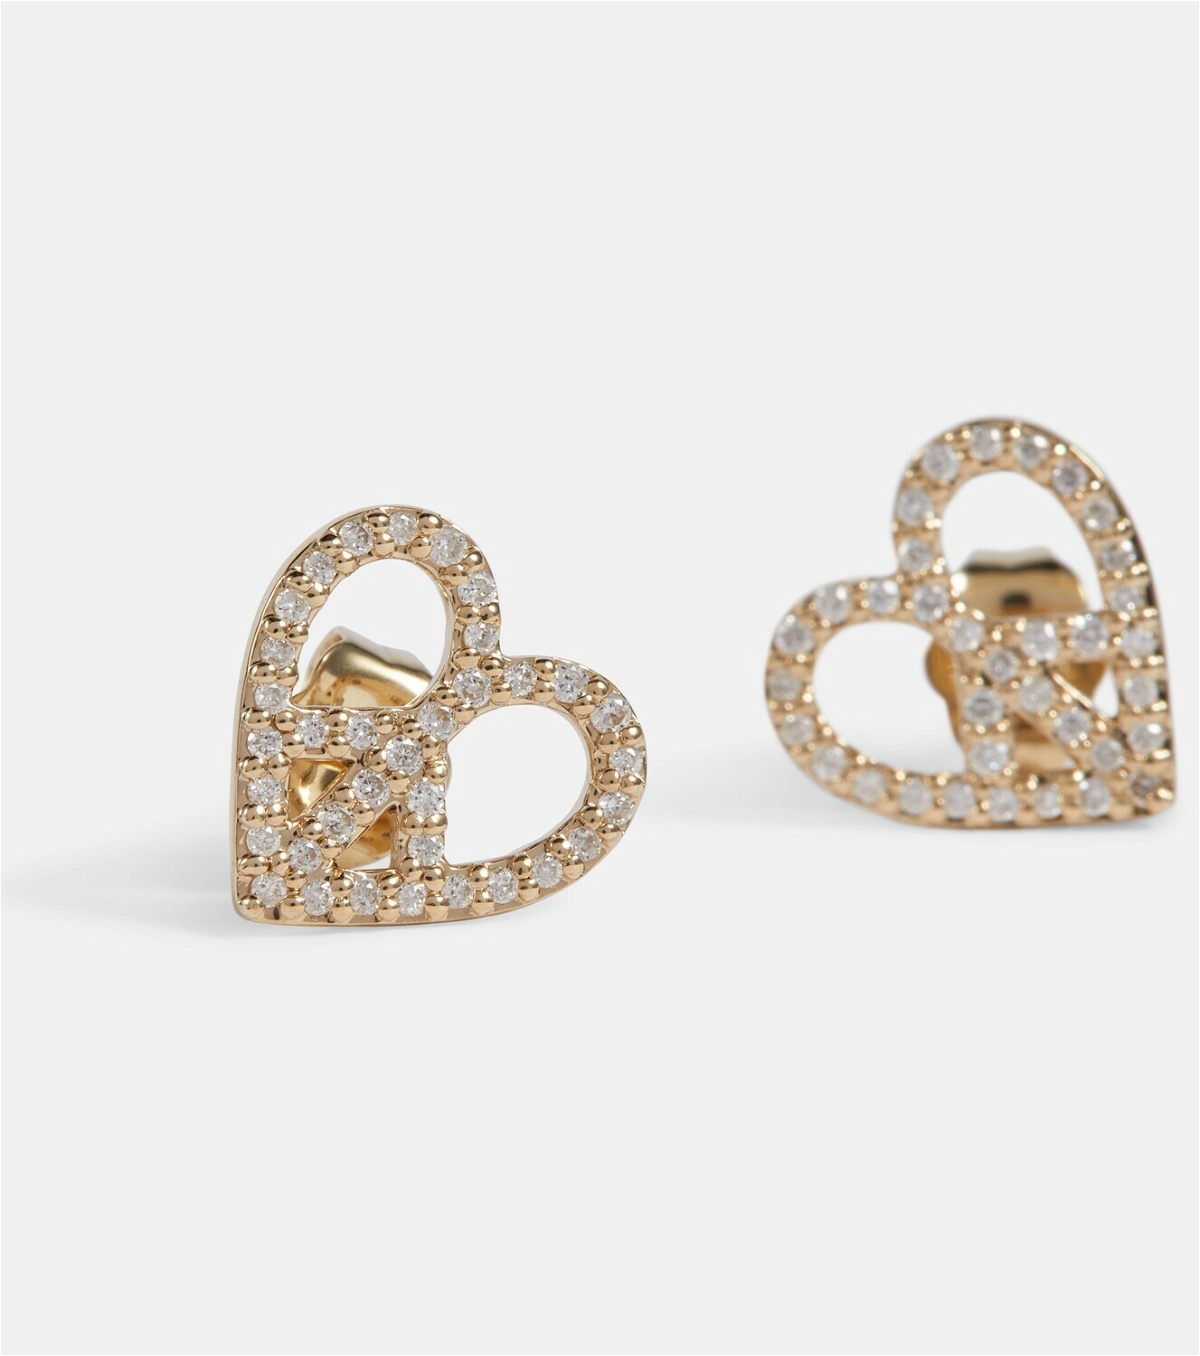 Sydney Evan Peace Heart 14kt gold earrings with diamonds